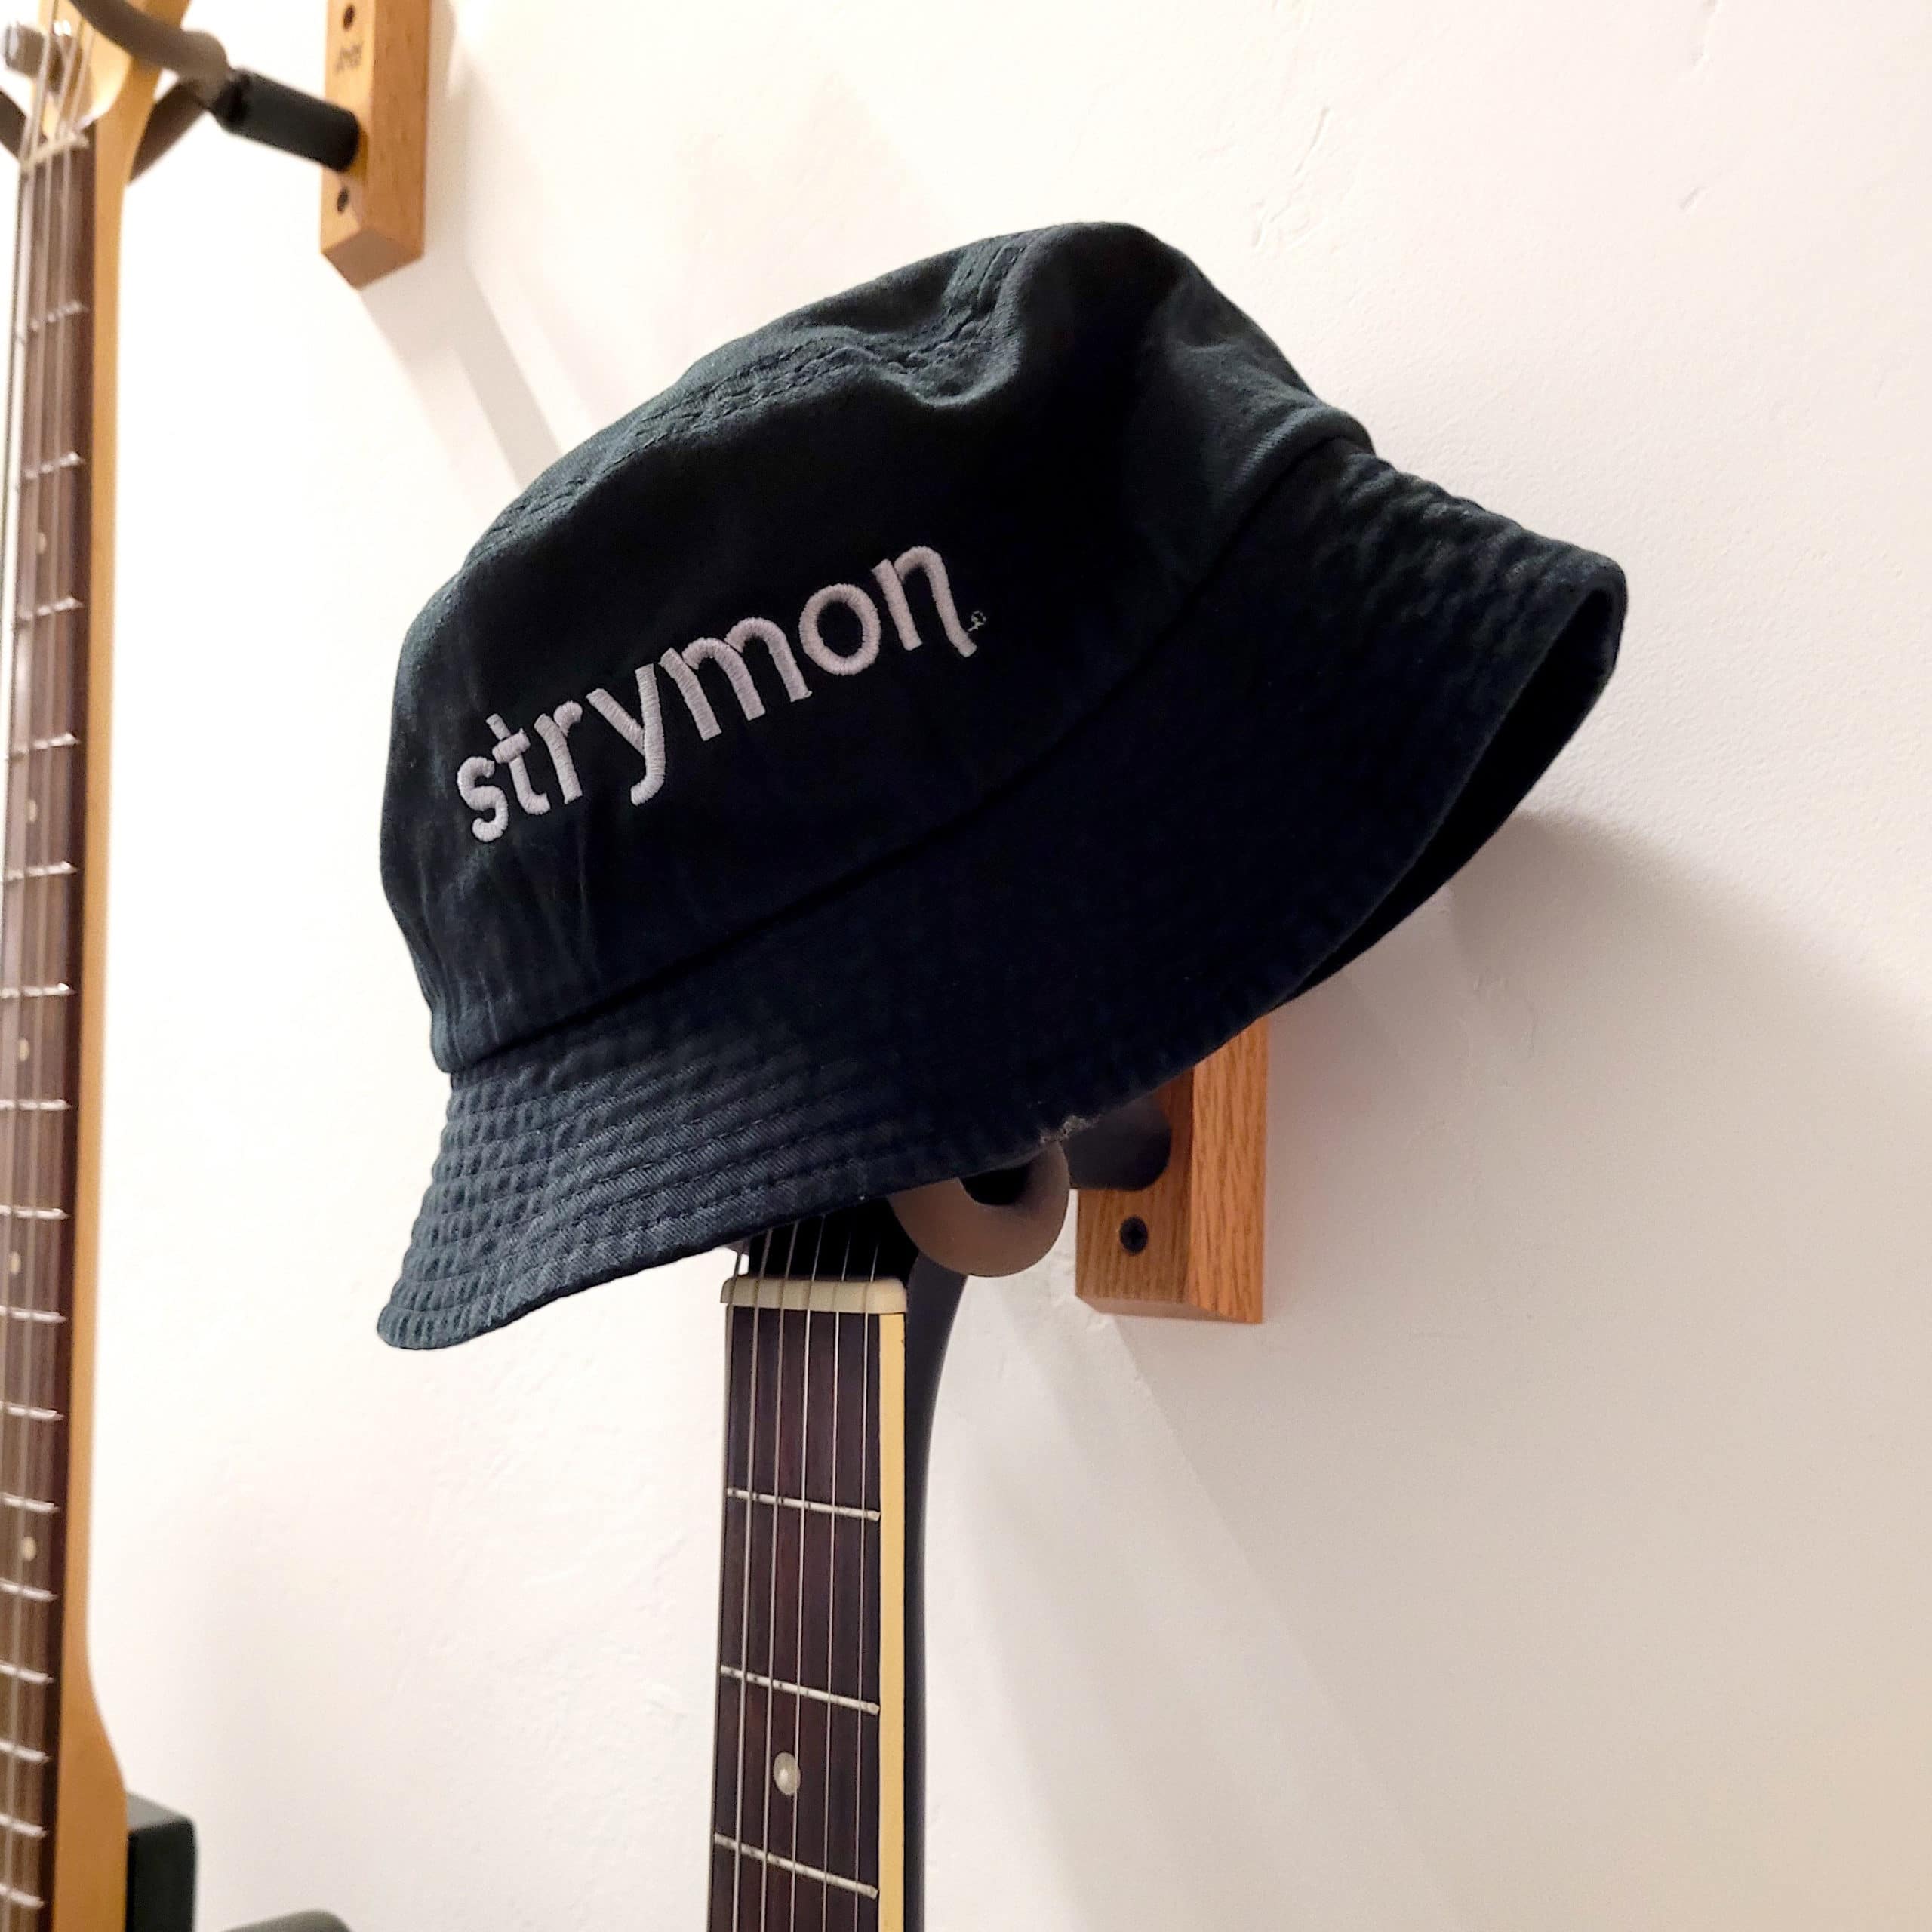 Strymon bucket hat (white on black) - Strymon